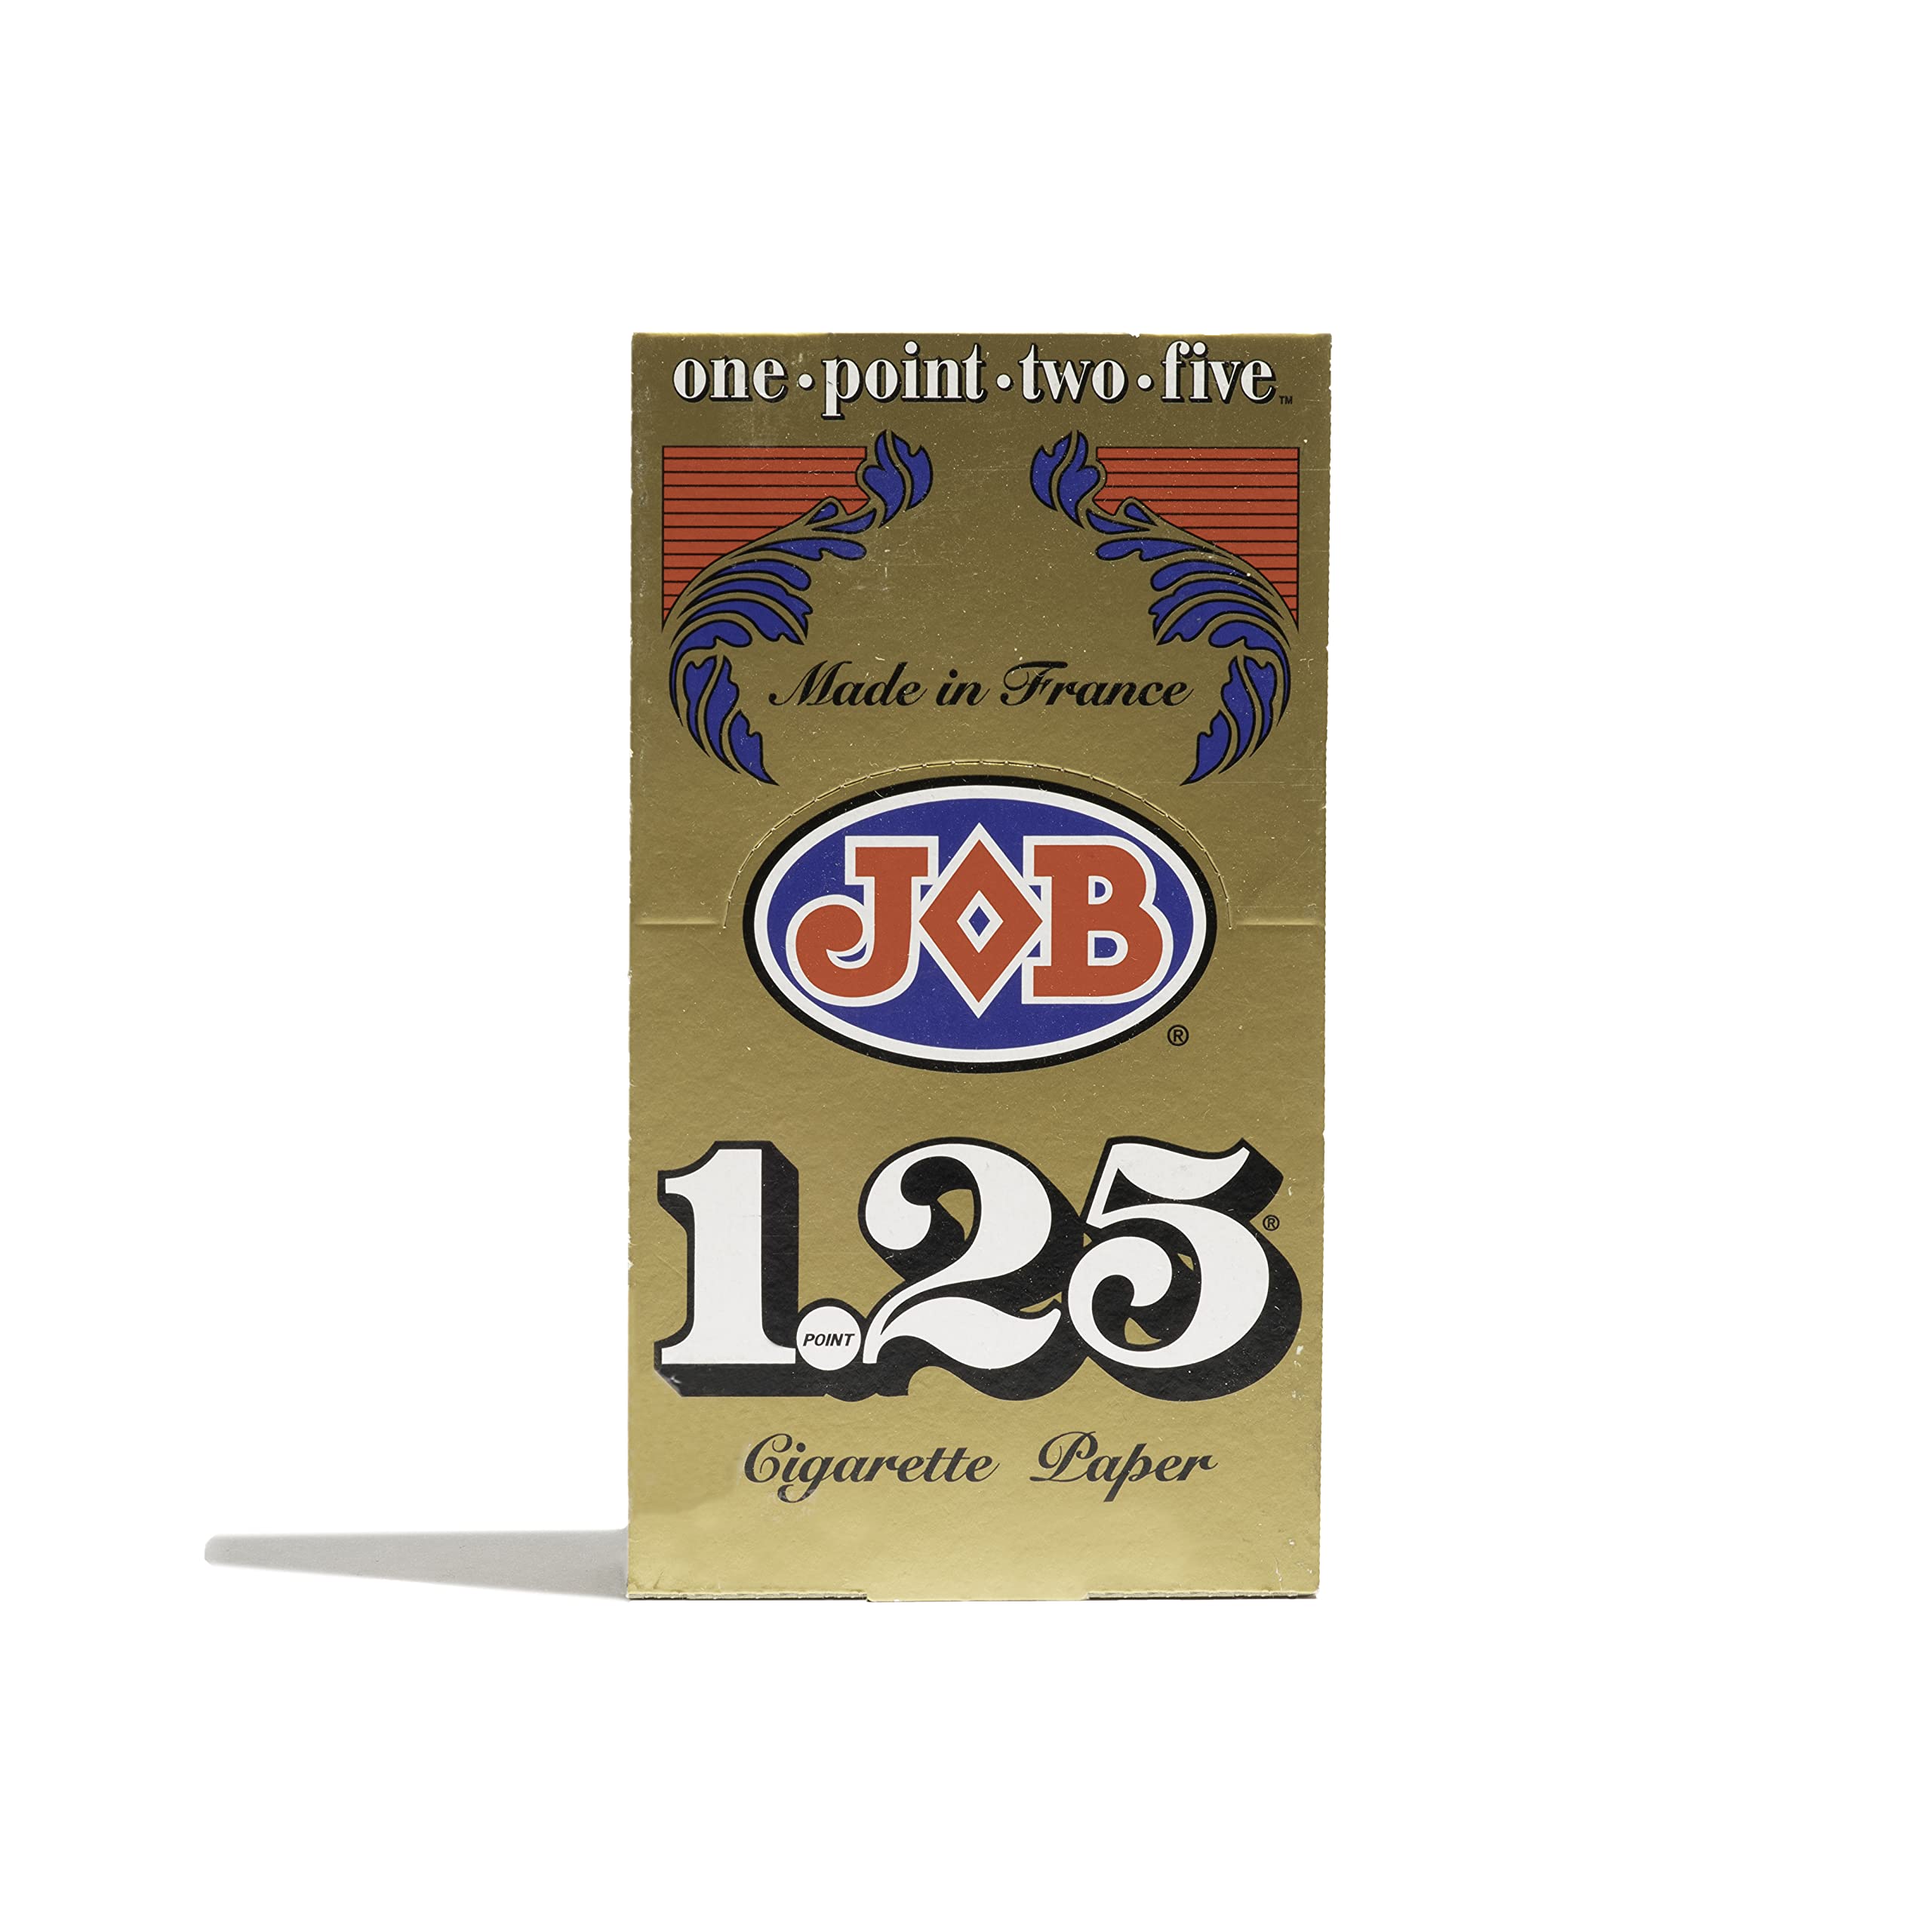 JOB Gold 1.25 Rolling Paper Wholesale – 1 Box / 24ct